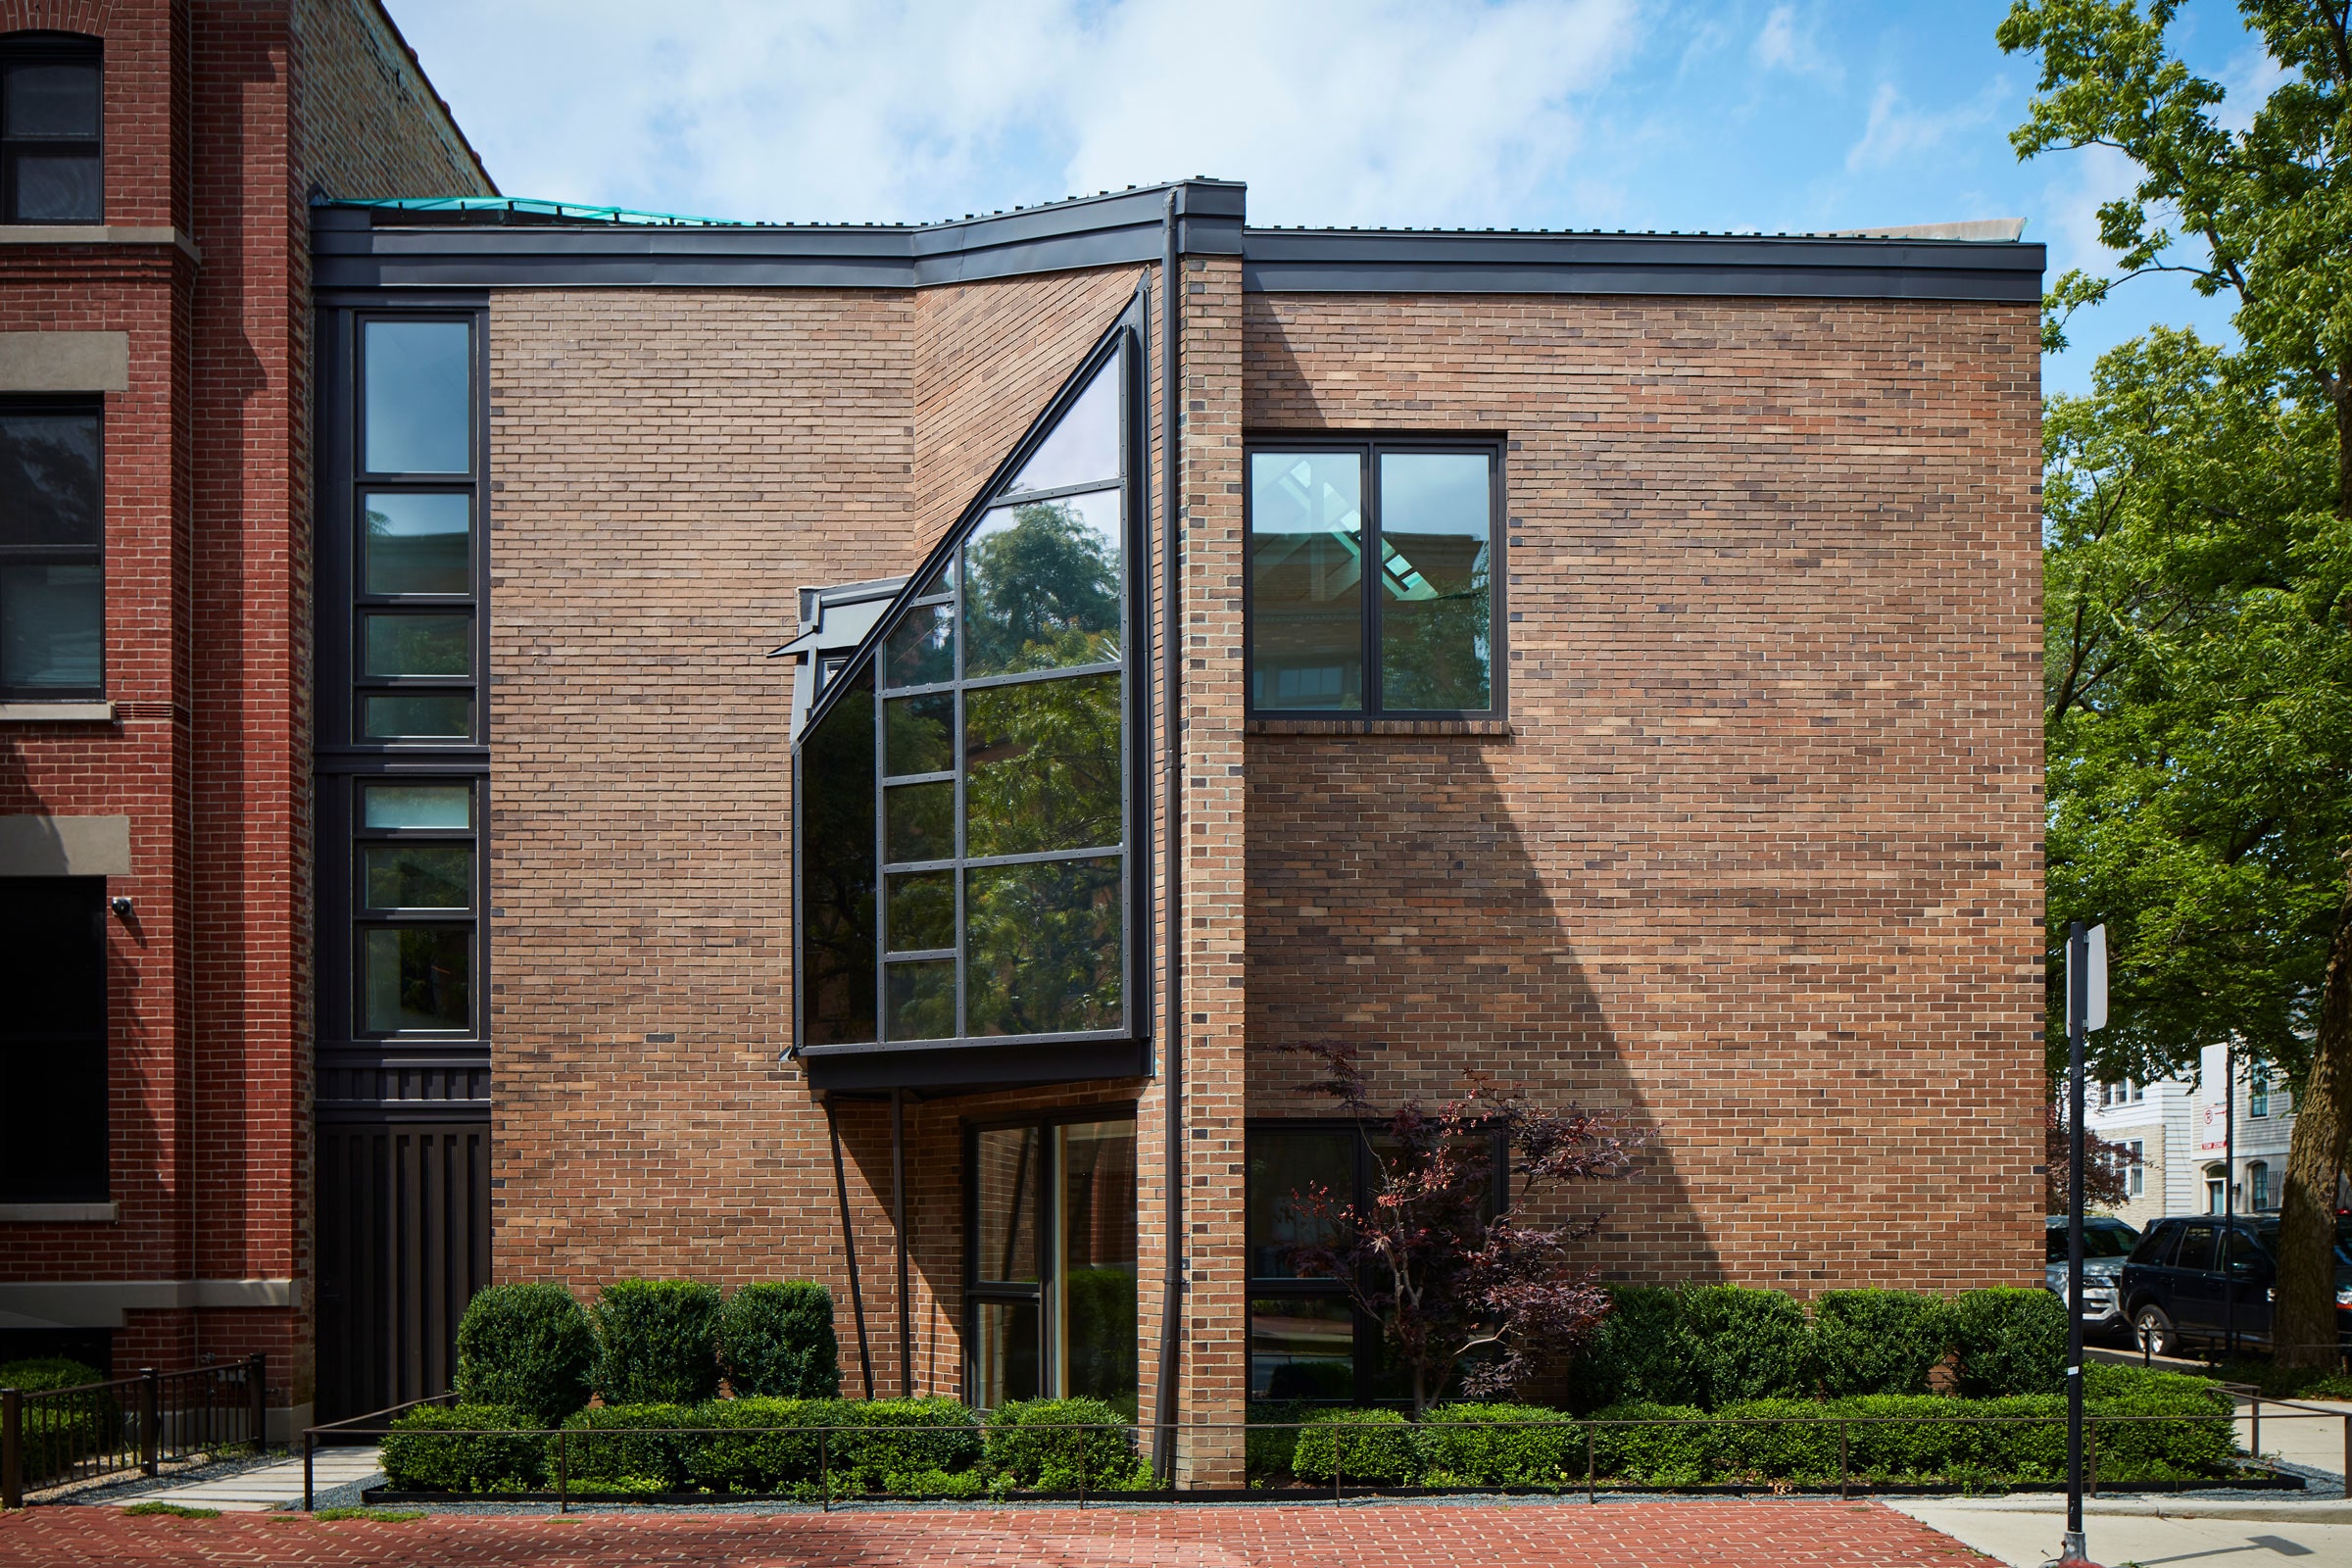 The Netsch Residence Balances Preservation and Modern Design